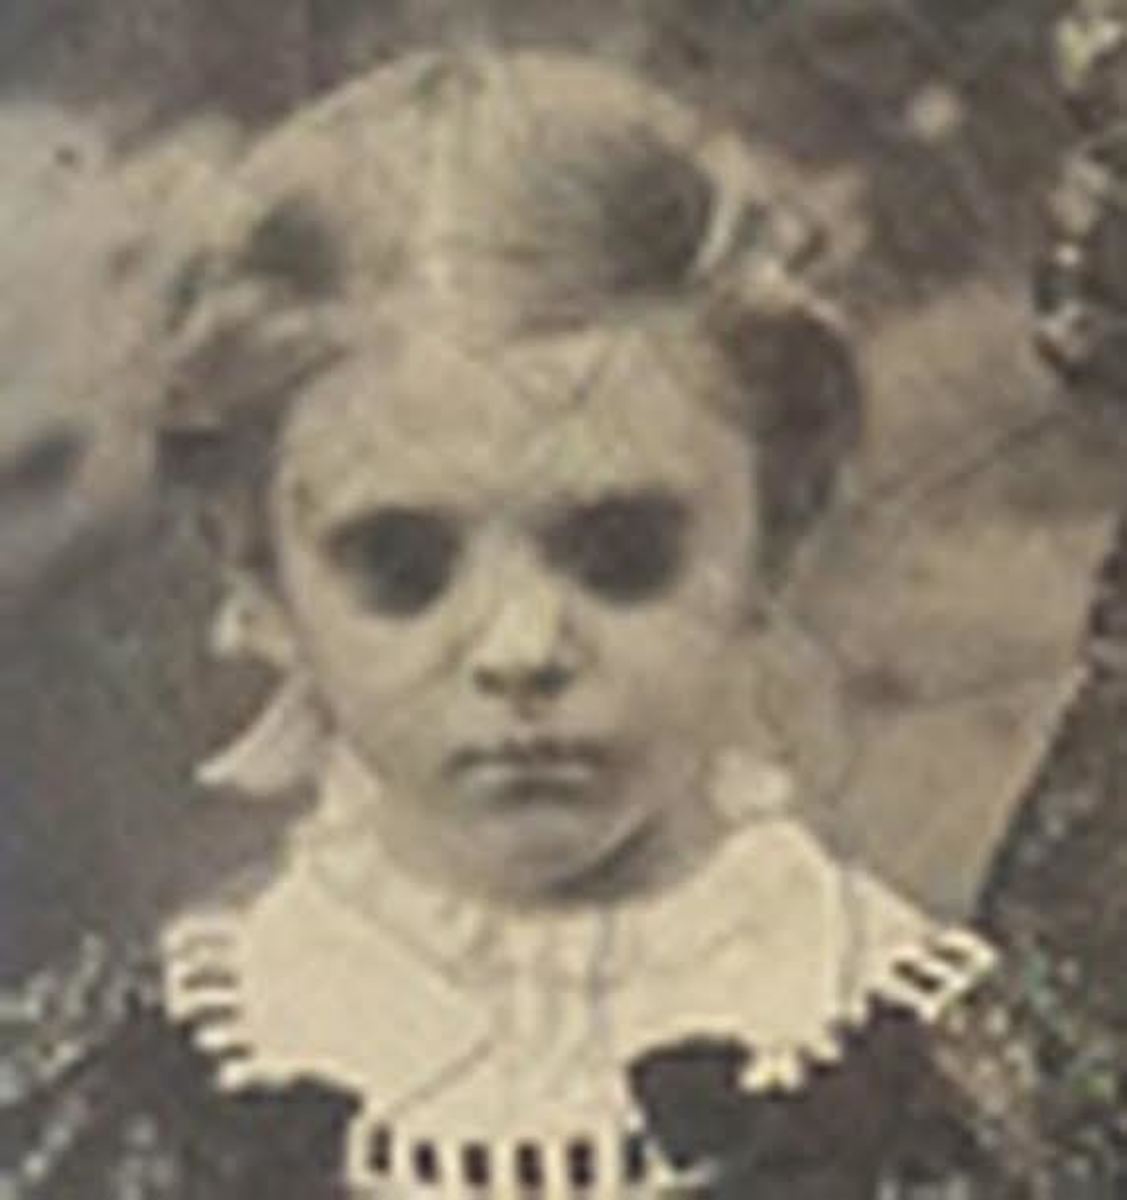 Black eyed child image similar to the "Dodechild"said to haunt the church 